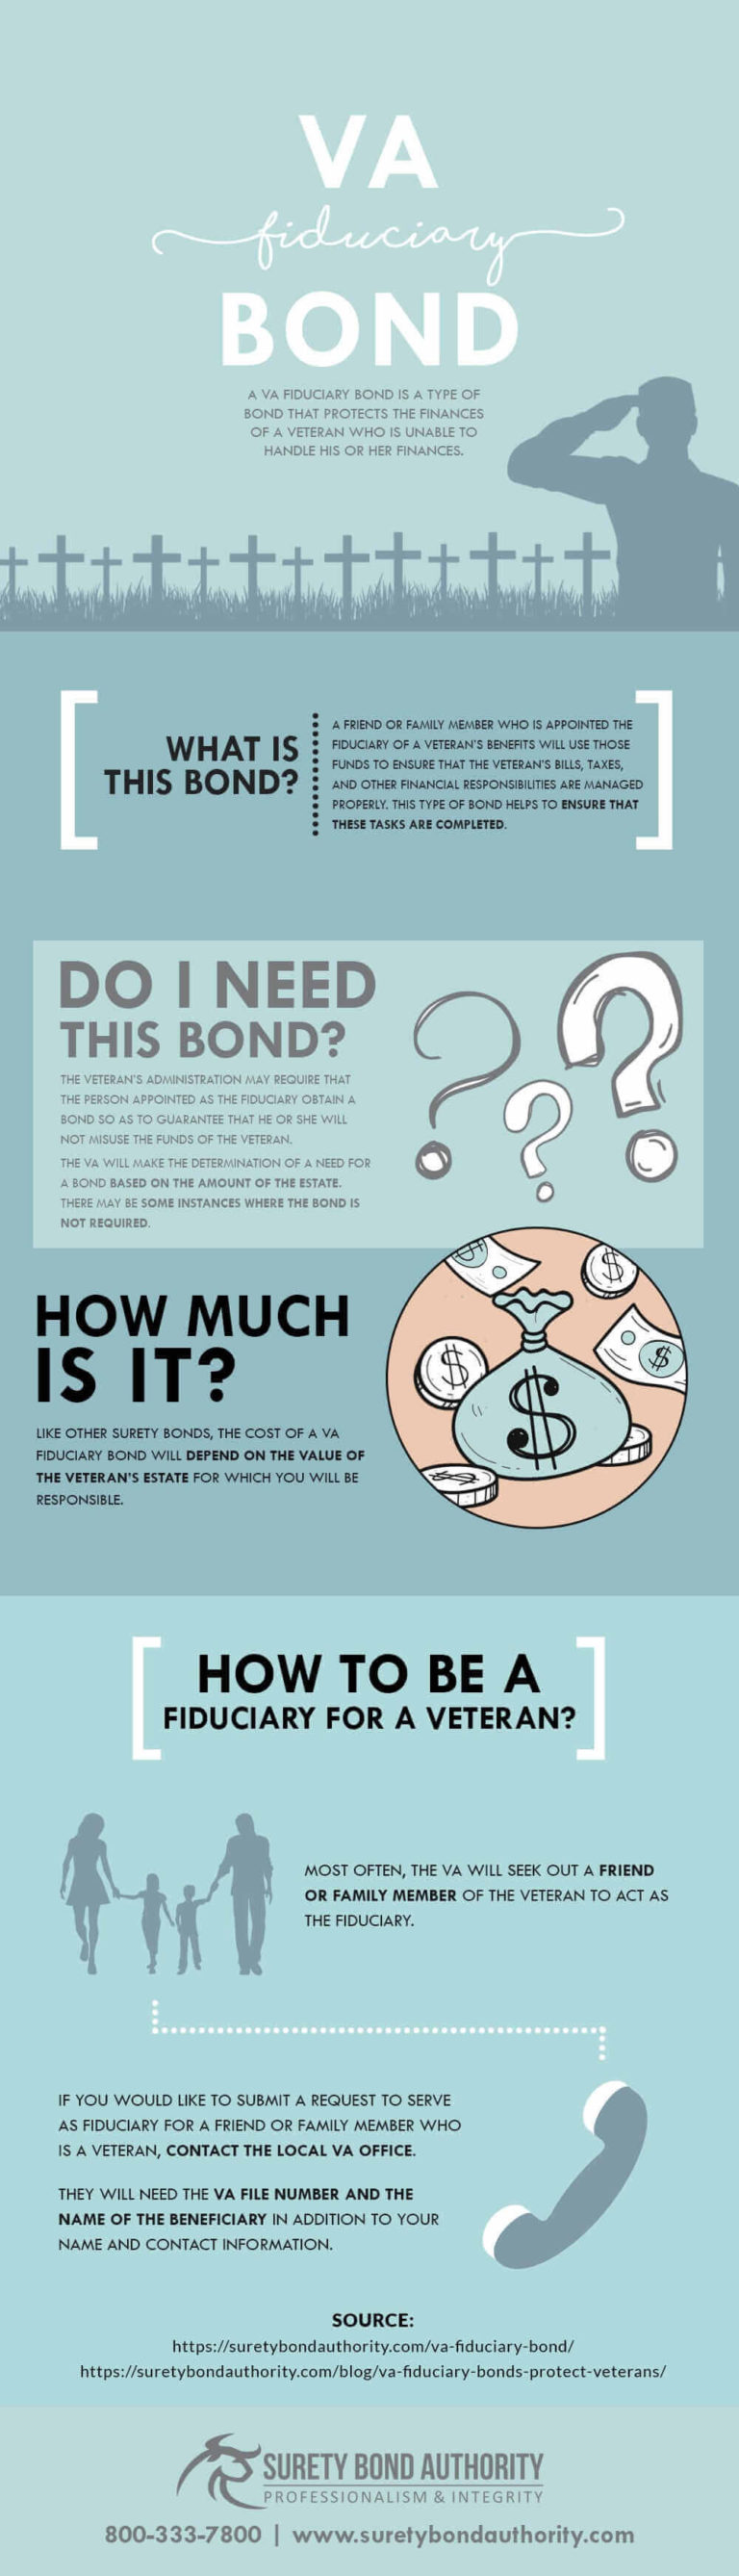 VA Fiduciary Bond Infographic